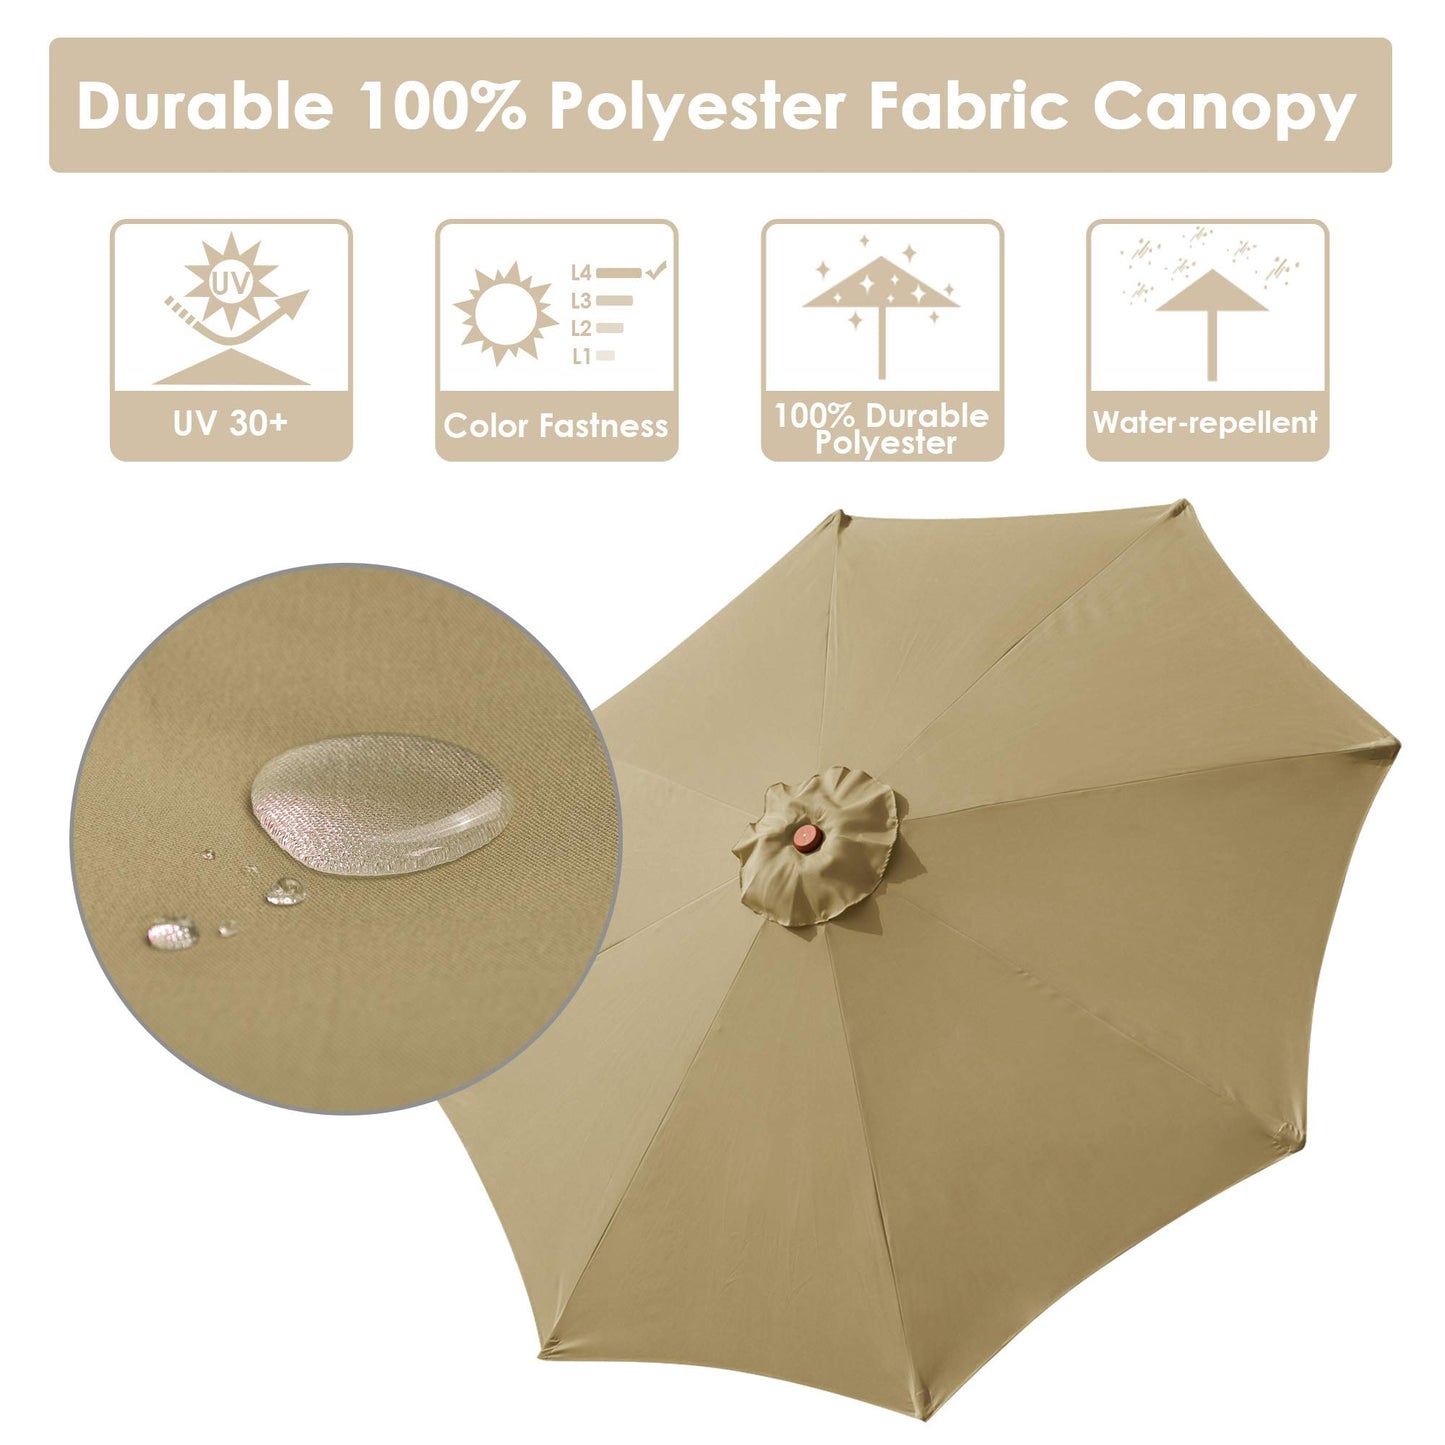 Yescom 9ft Tan Wooden Outdoor Patio Table Umbrella with Pulley Market Garden Yard Beach Deck Cafe Decor Sunshade